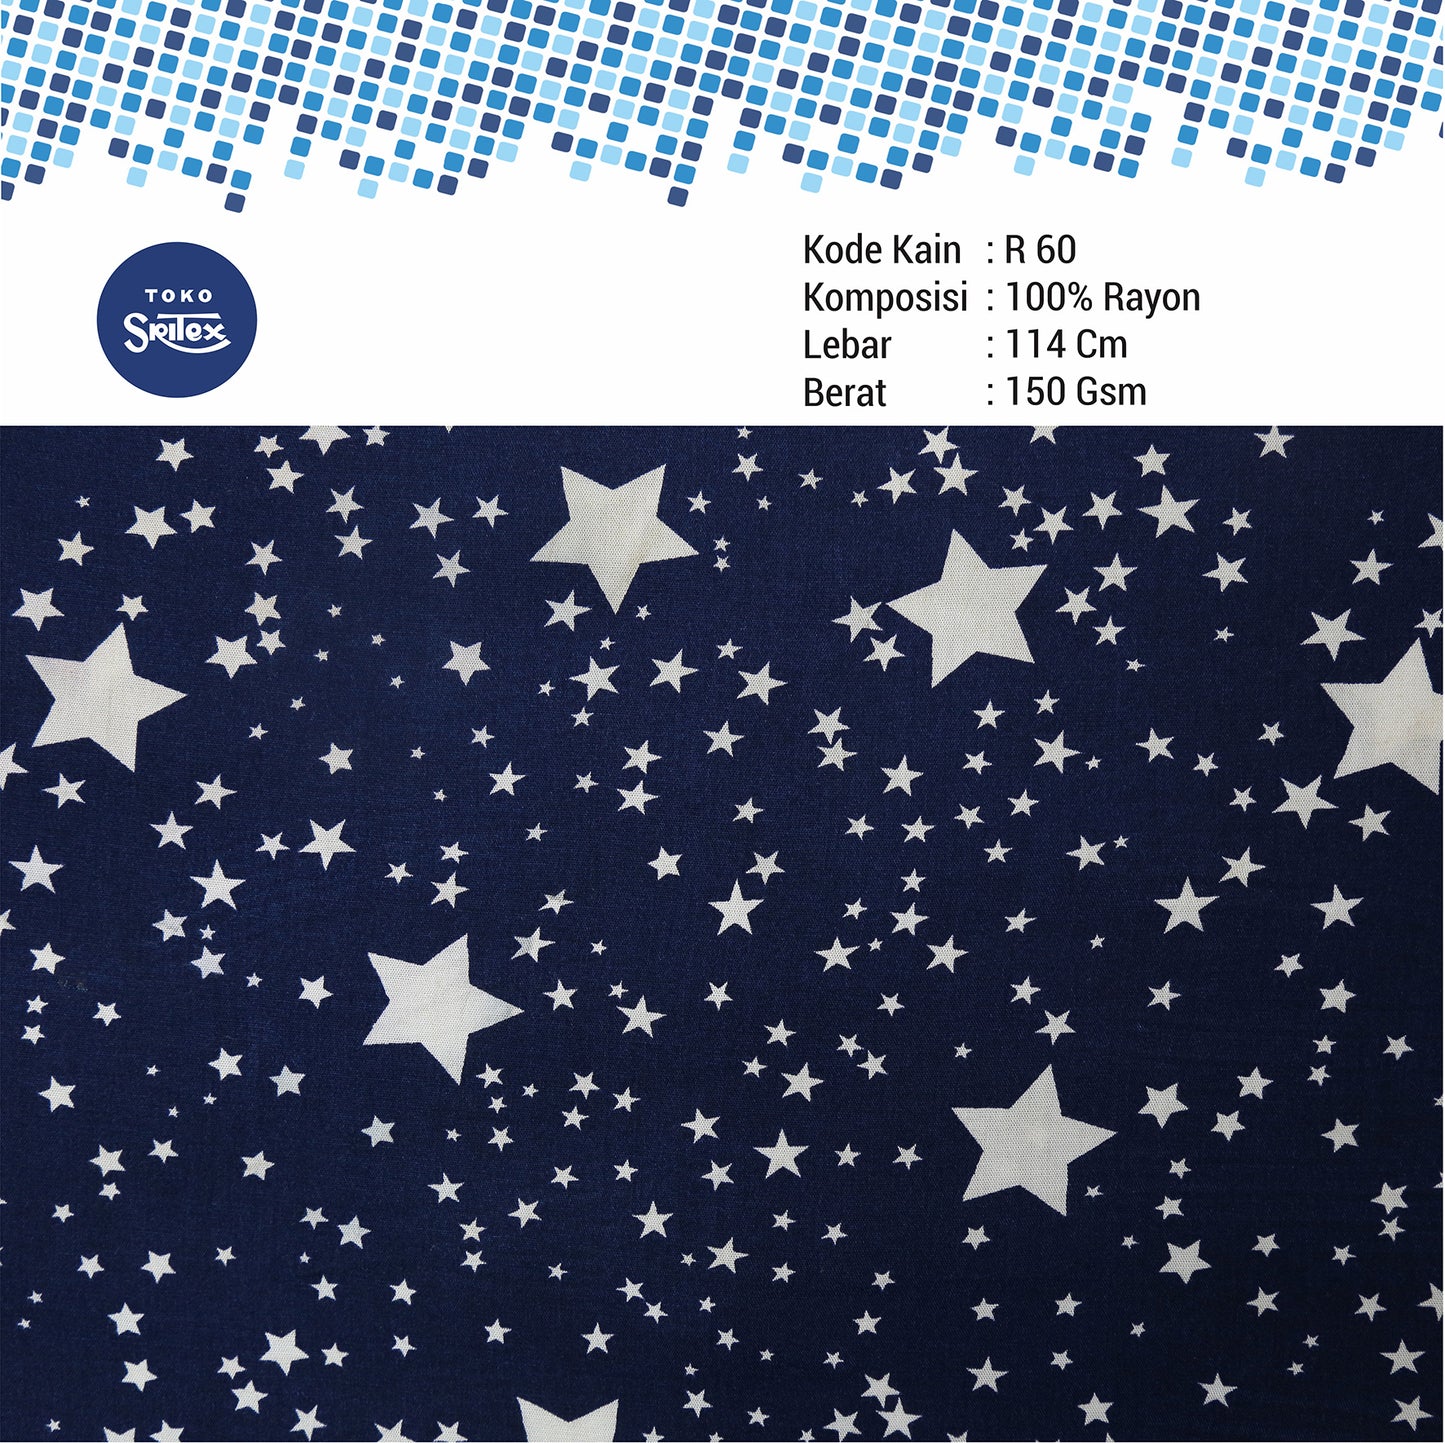 Toko Sritex Kain Rayon Print Abstrak Bintang Premium Ekspor, R60. Harga per 45cm, Lebar 114cm.